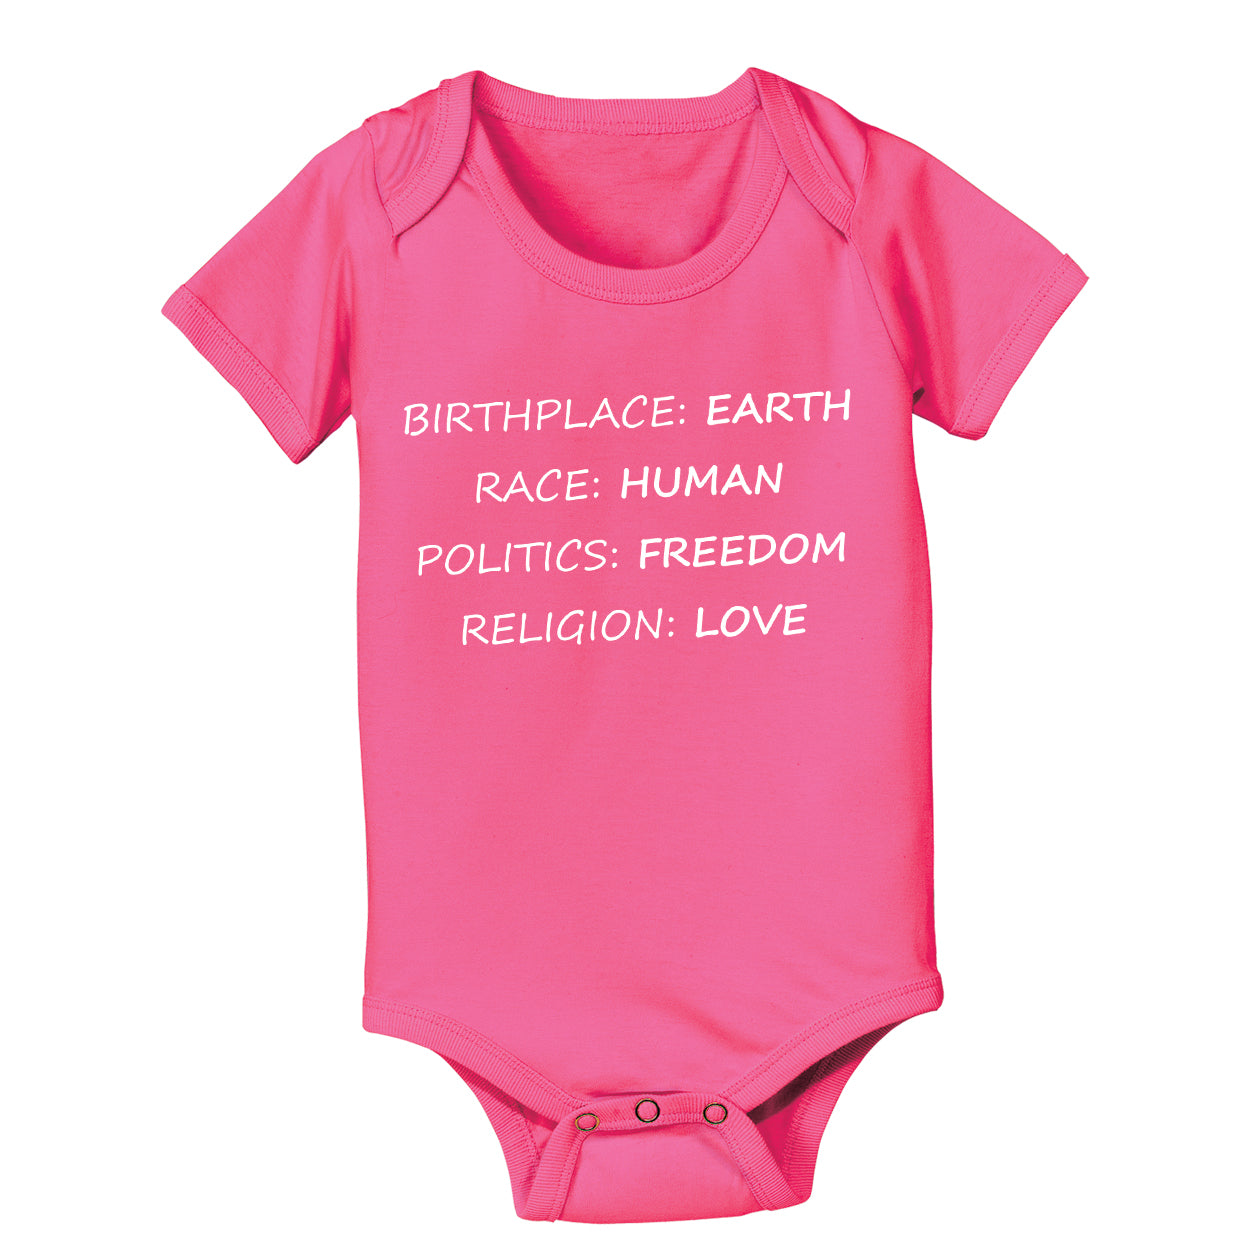 Birthplace Earth Kids Tshirt - Donkey Tees